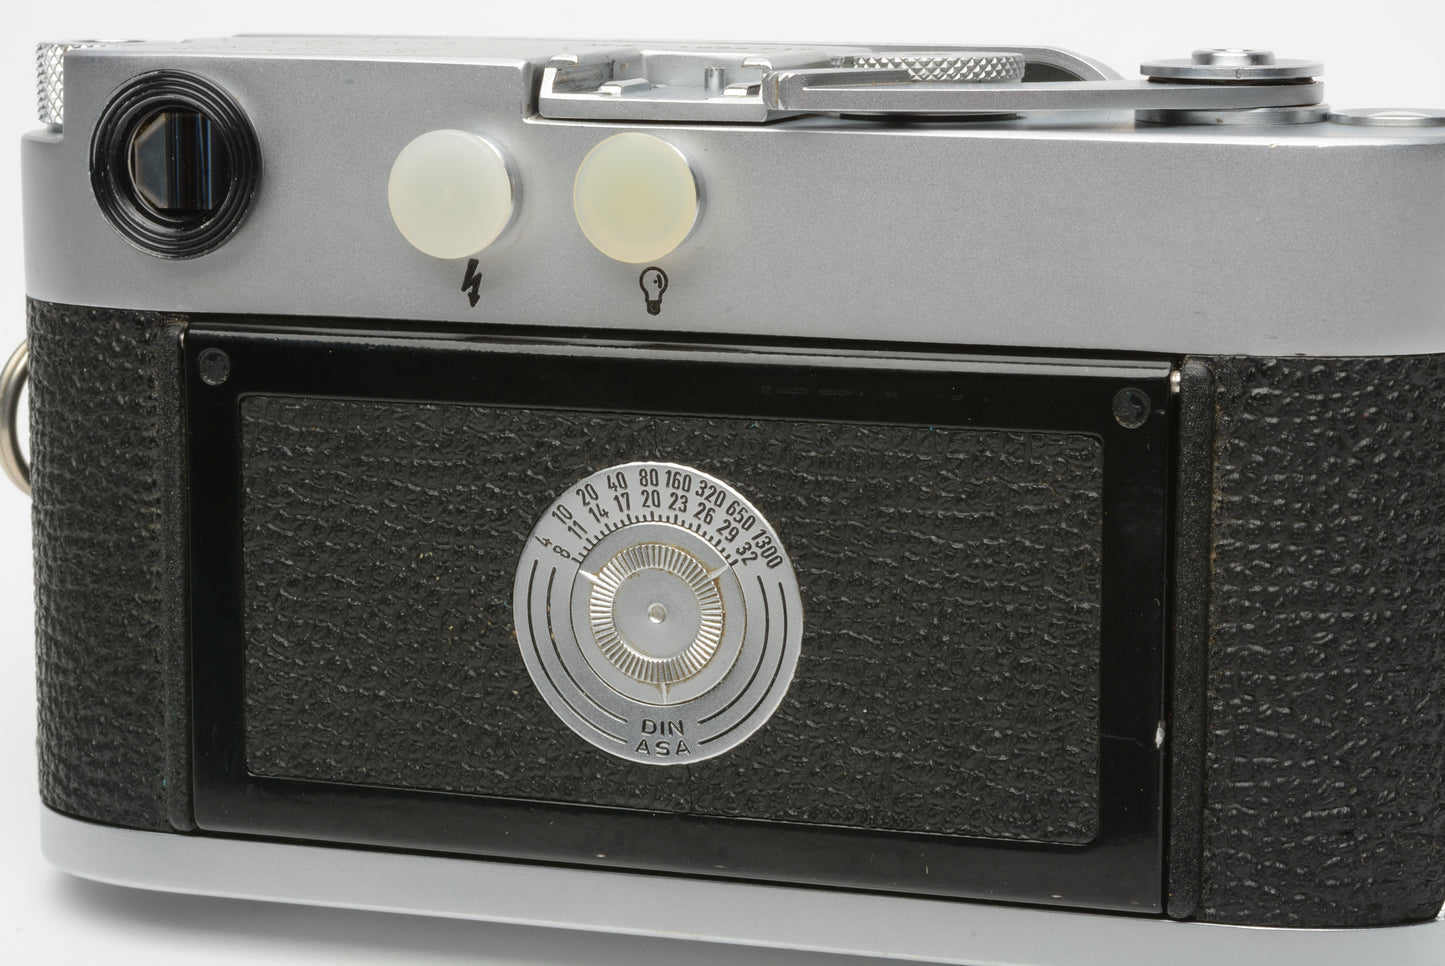 Leica M3 SS w/Summicron 50mm f2 rigid lens + goggles, CLA'd, great!